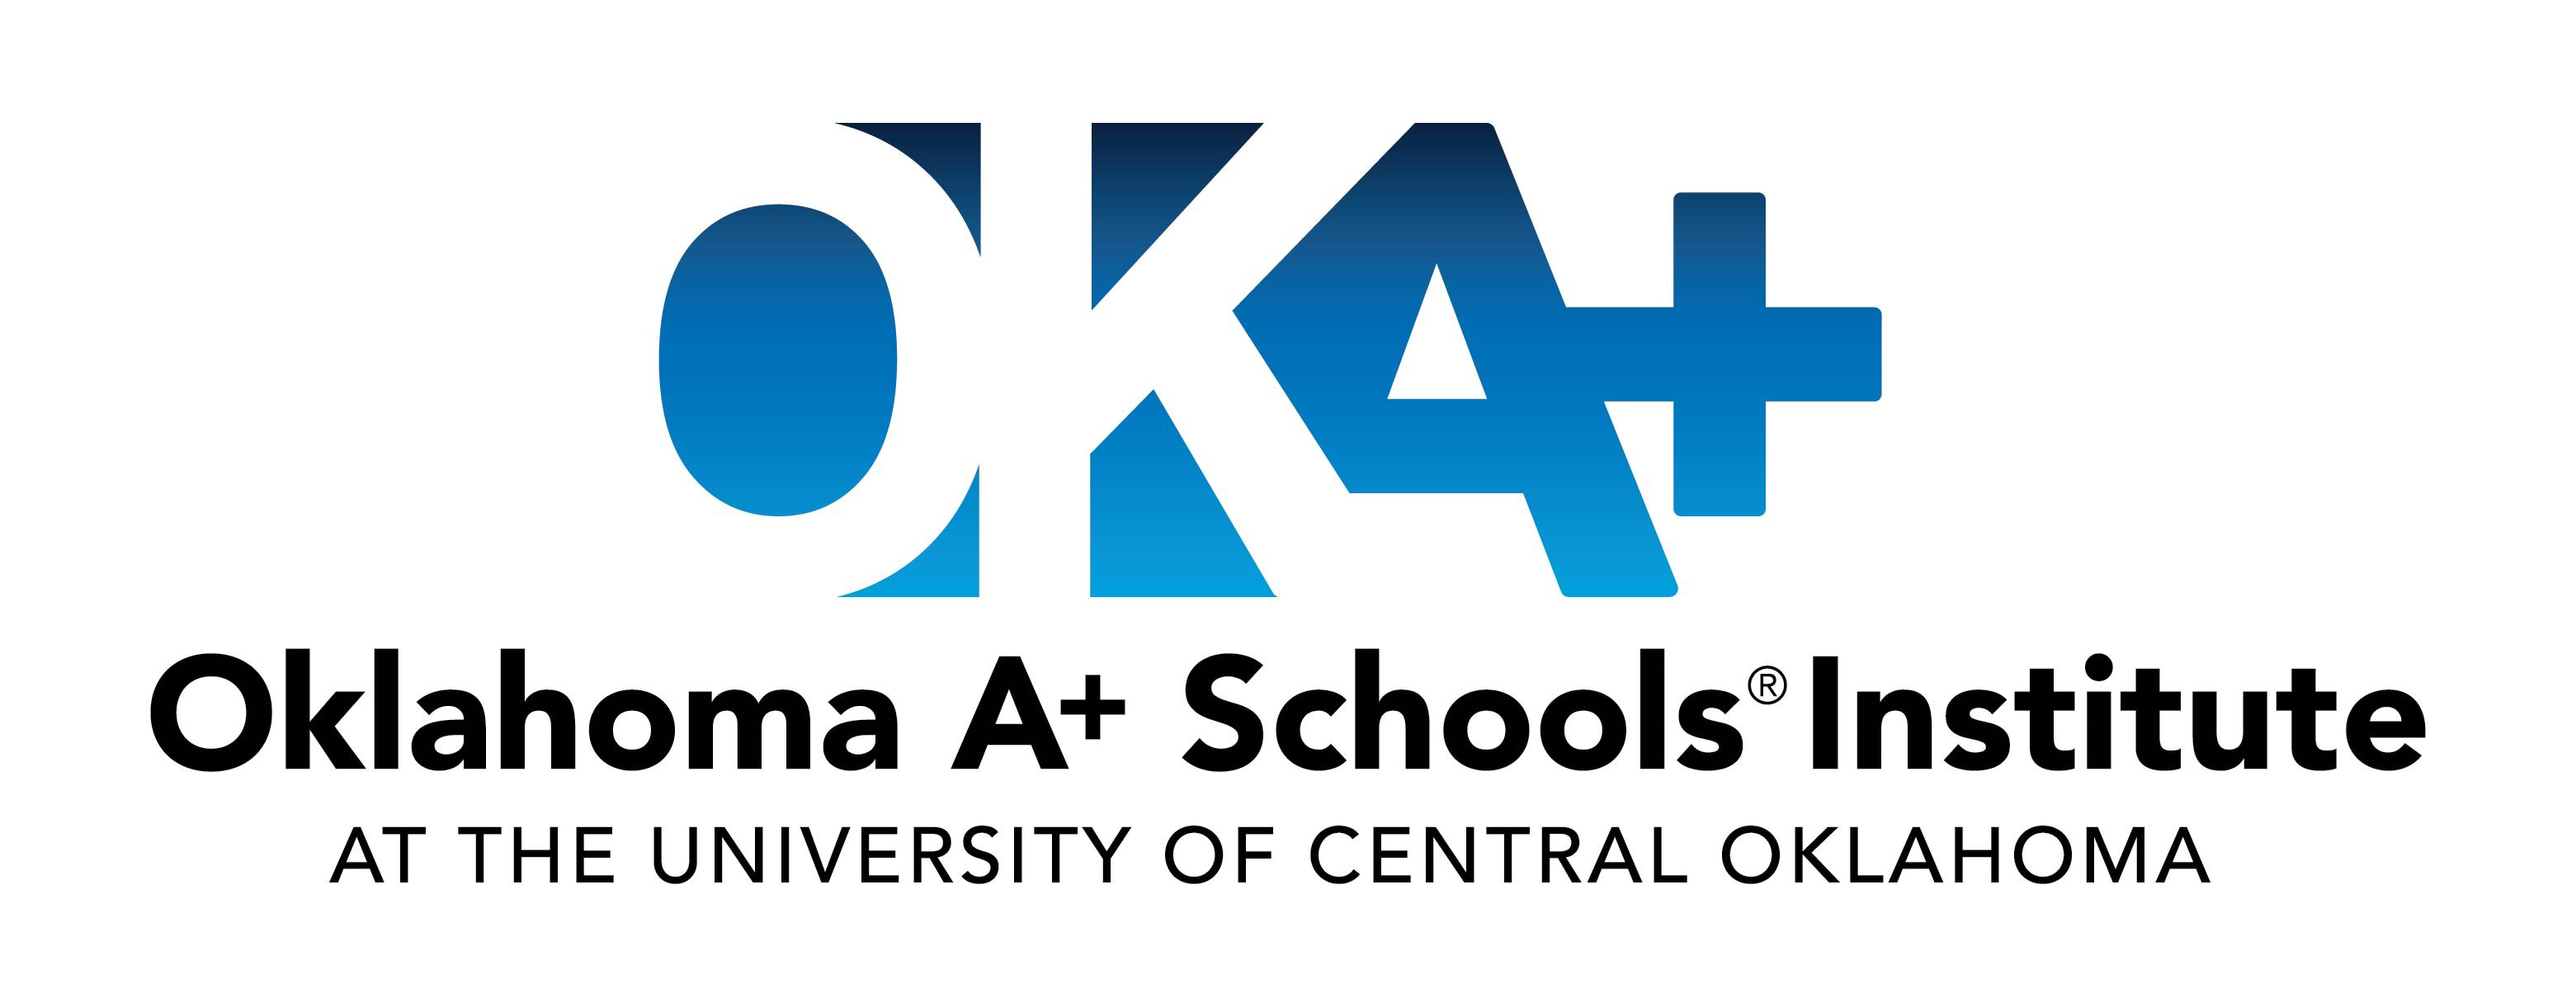 OKA+ Schools Institute logo